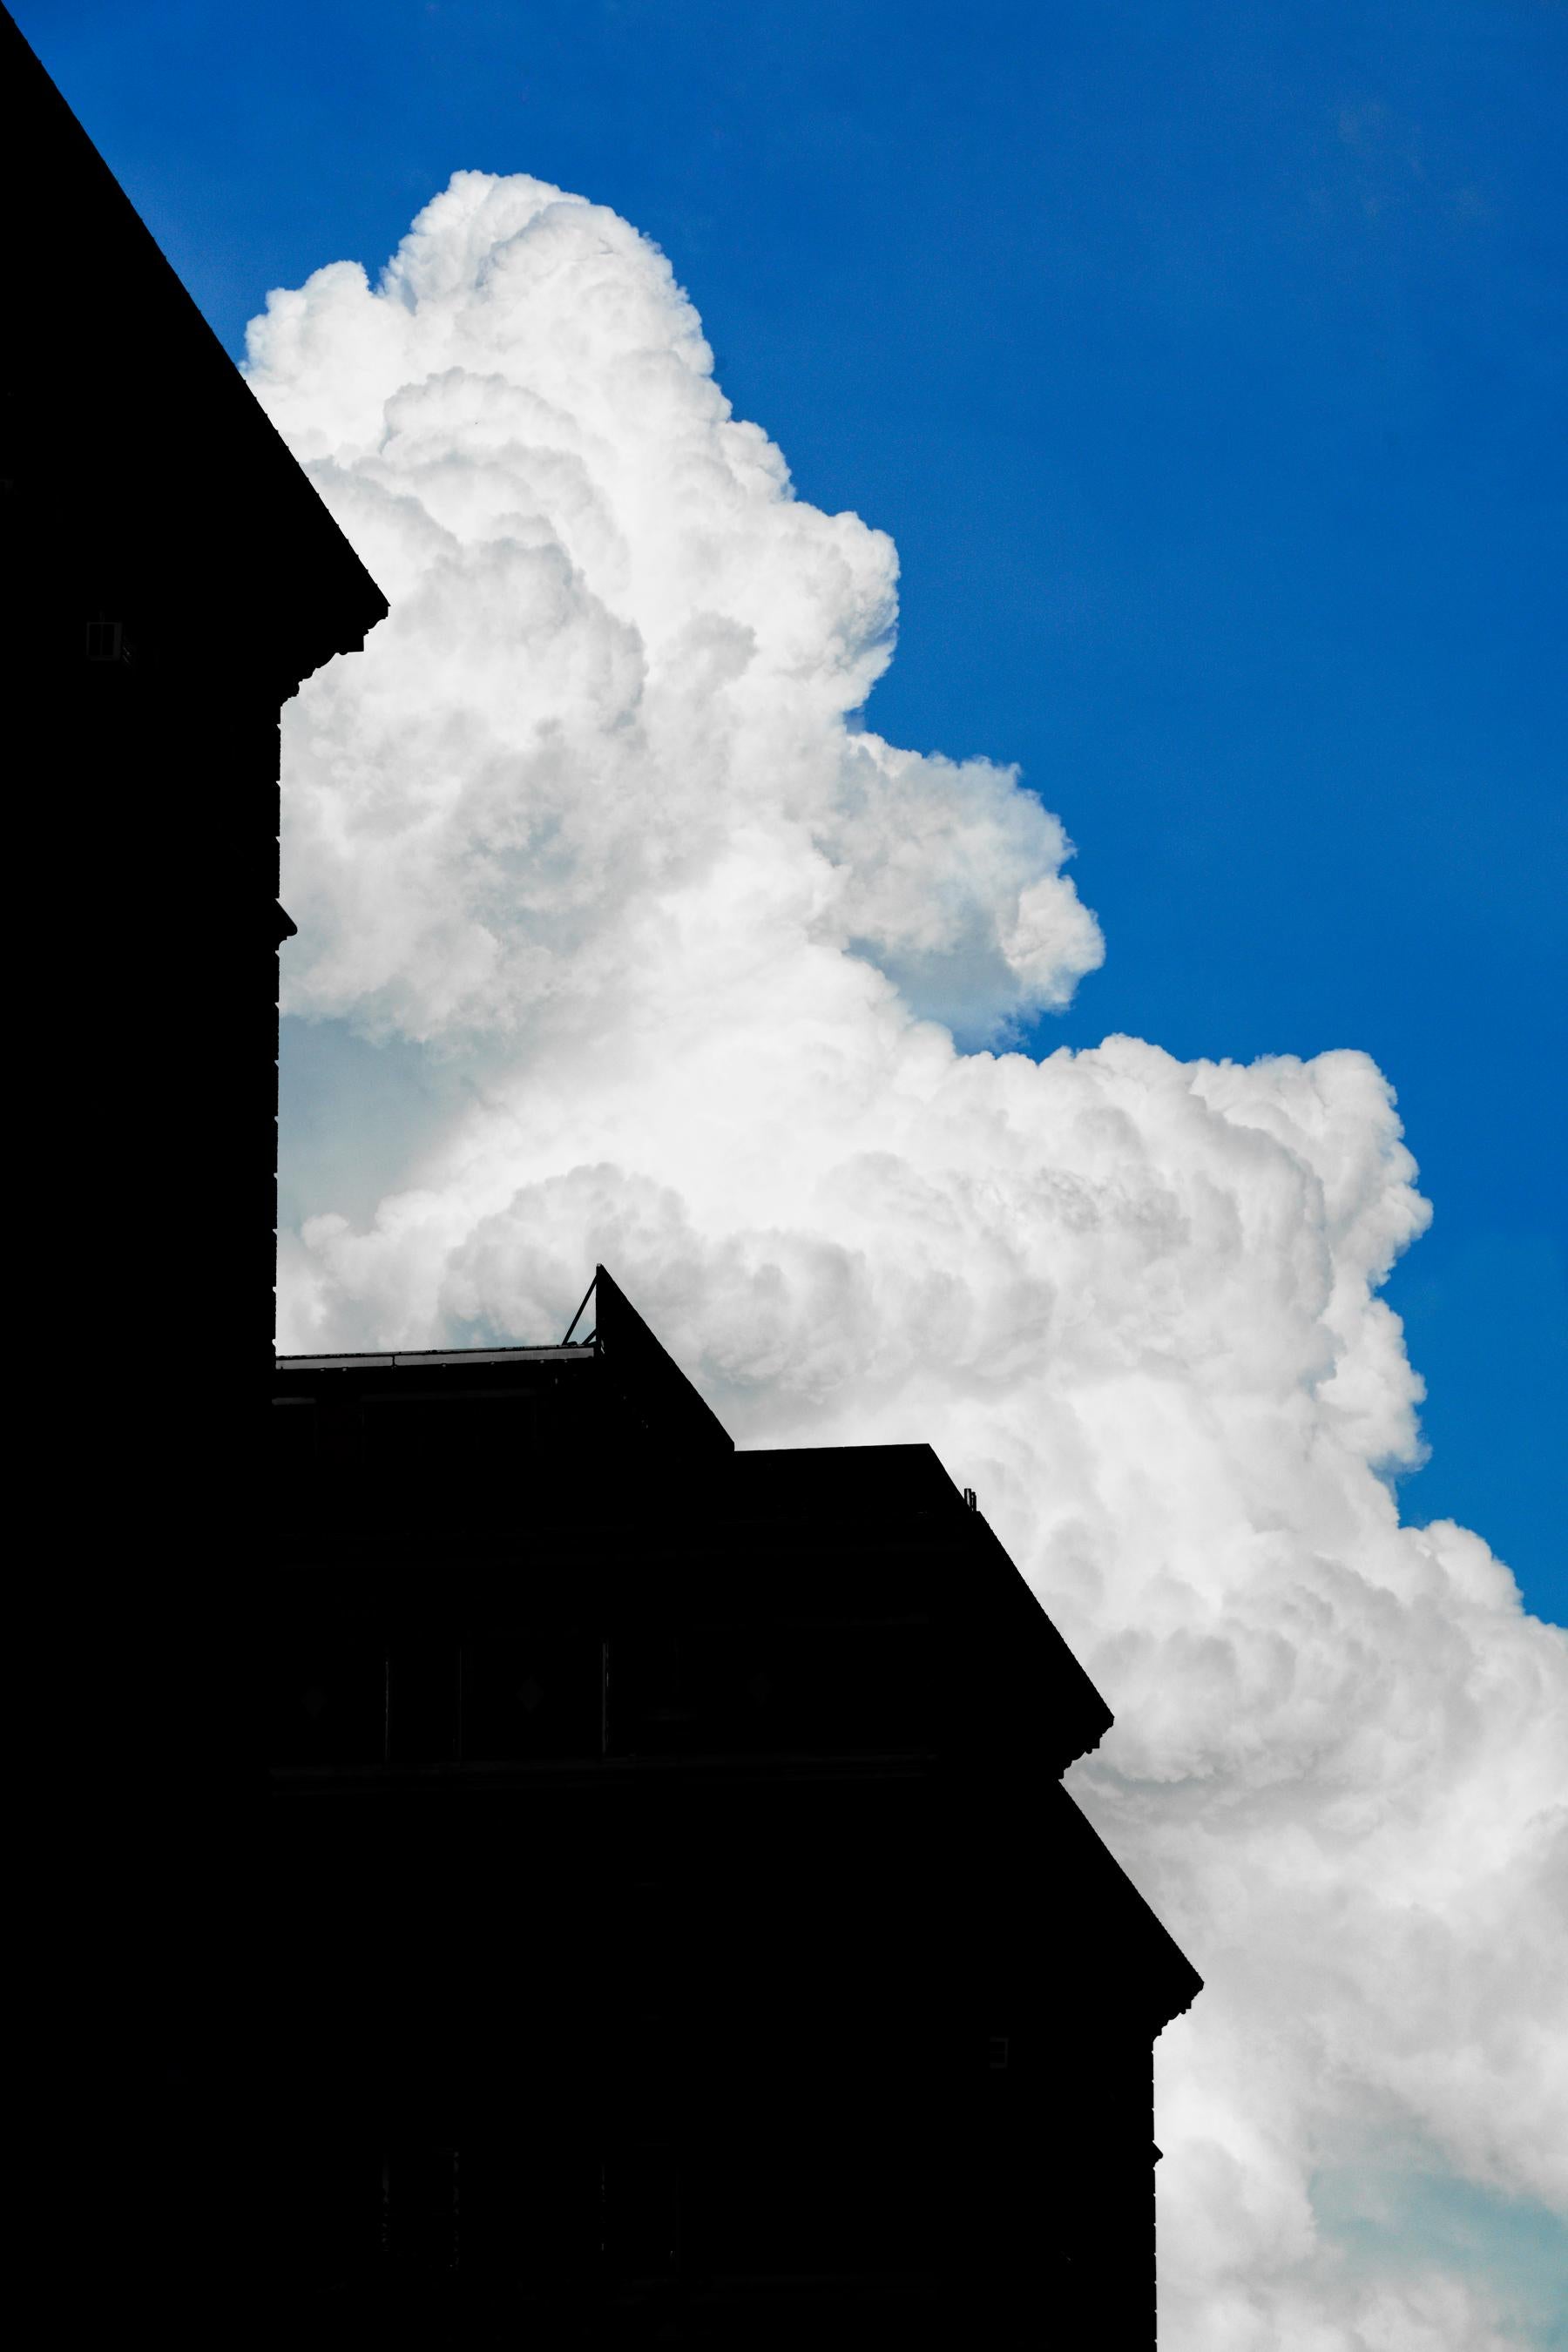 Bob Krasner Color Photograph - "Building With Cloud #2", photography, city, architecture, white cloud, blue sky